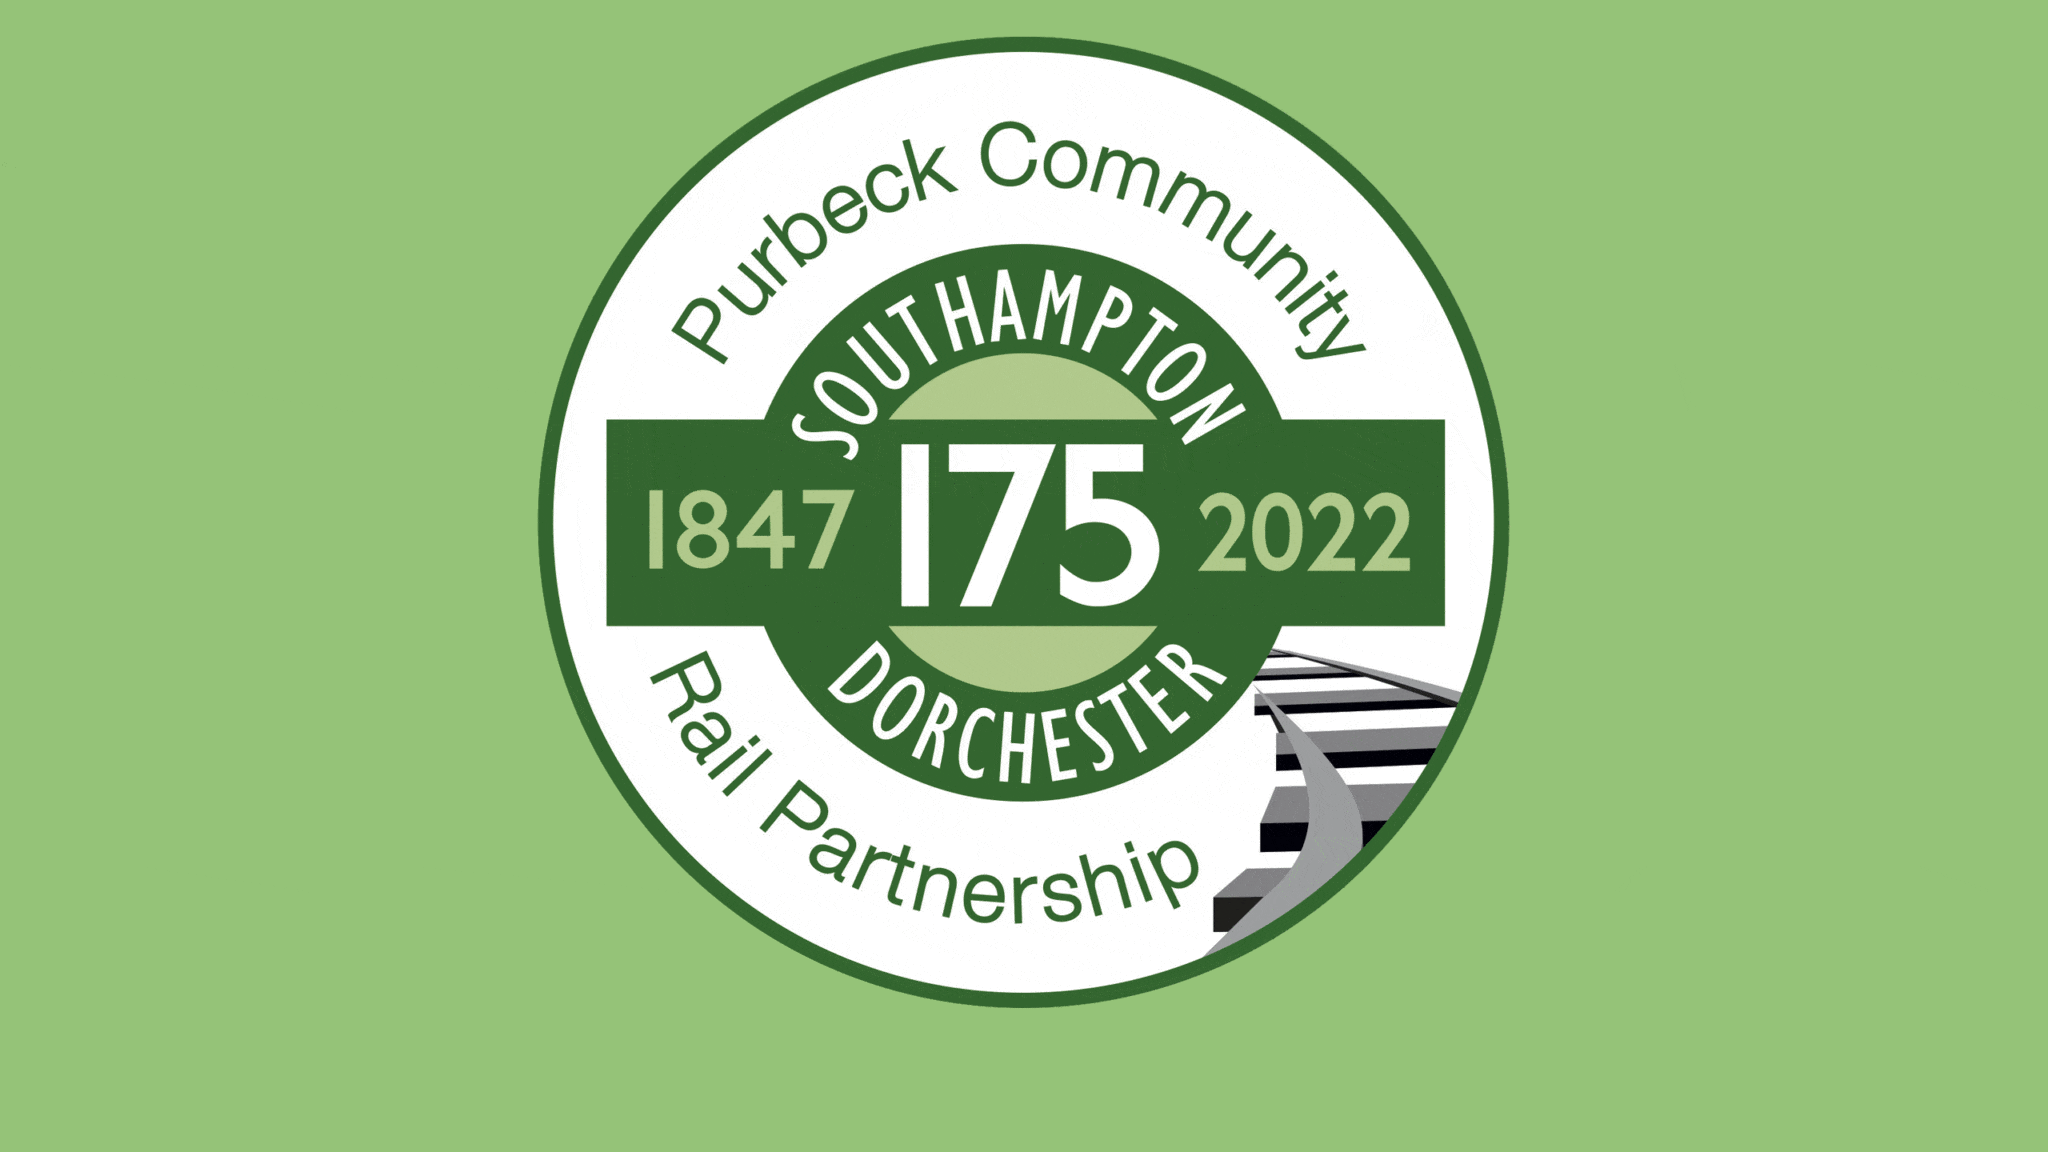 purbeck community rail partnership 175 years 2560x1440px